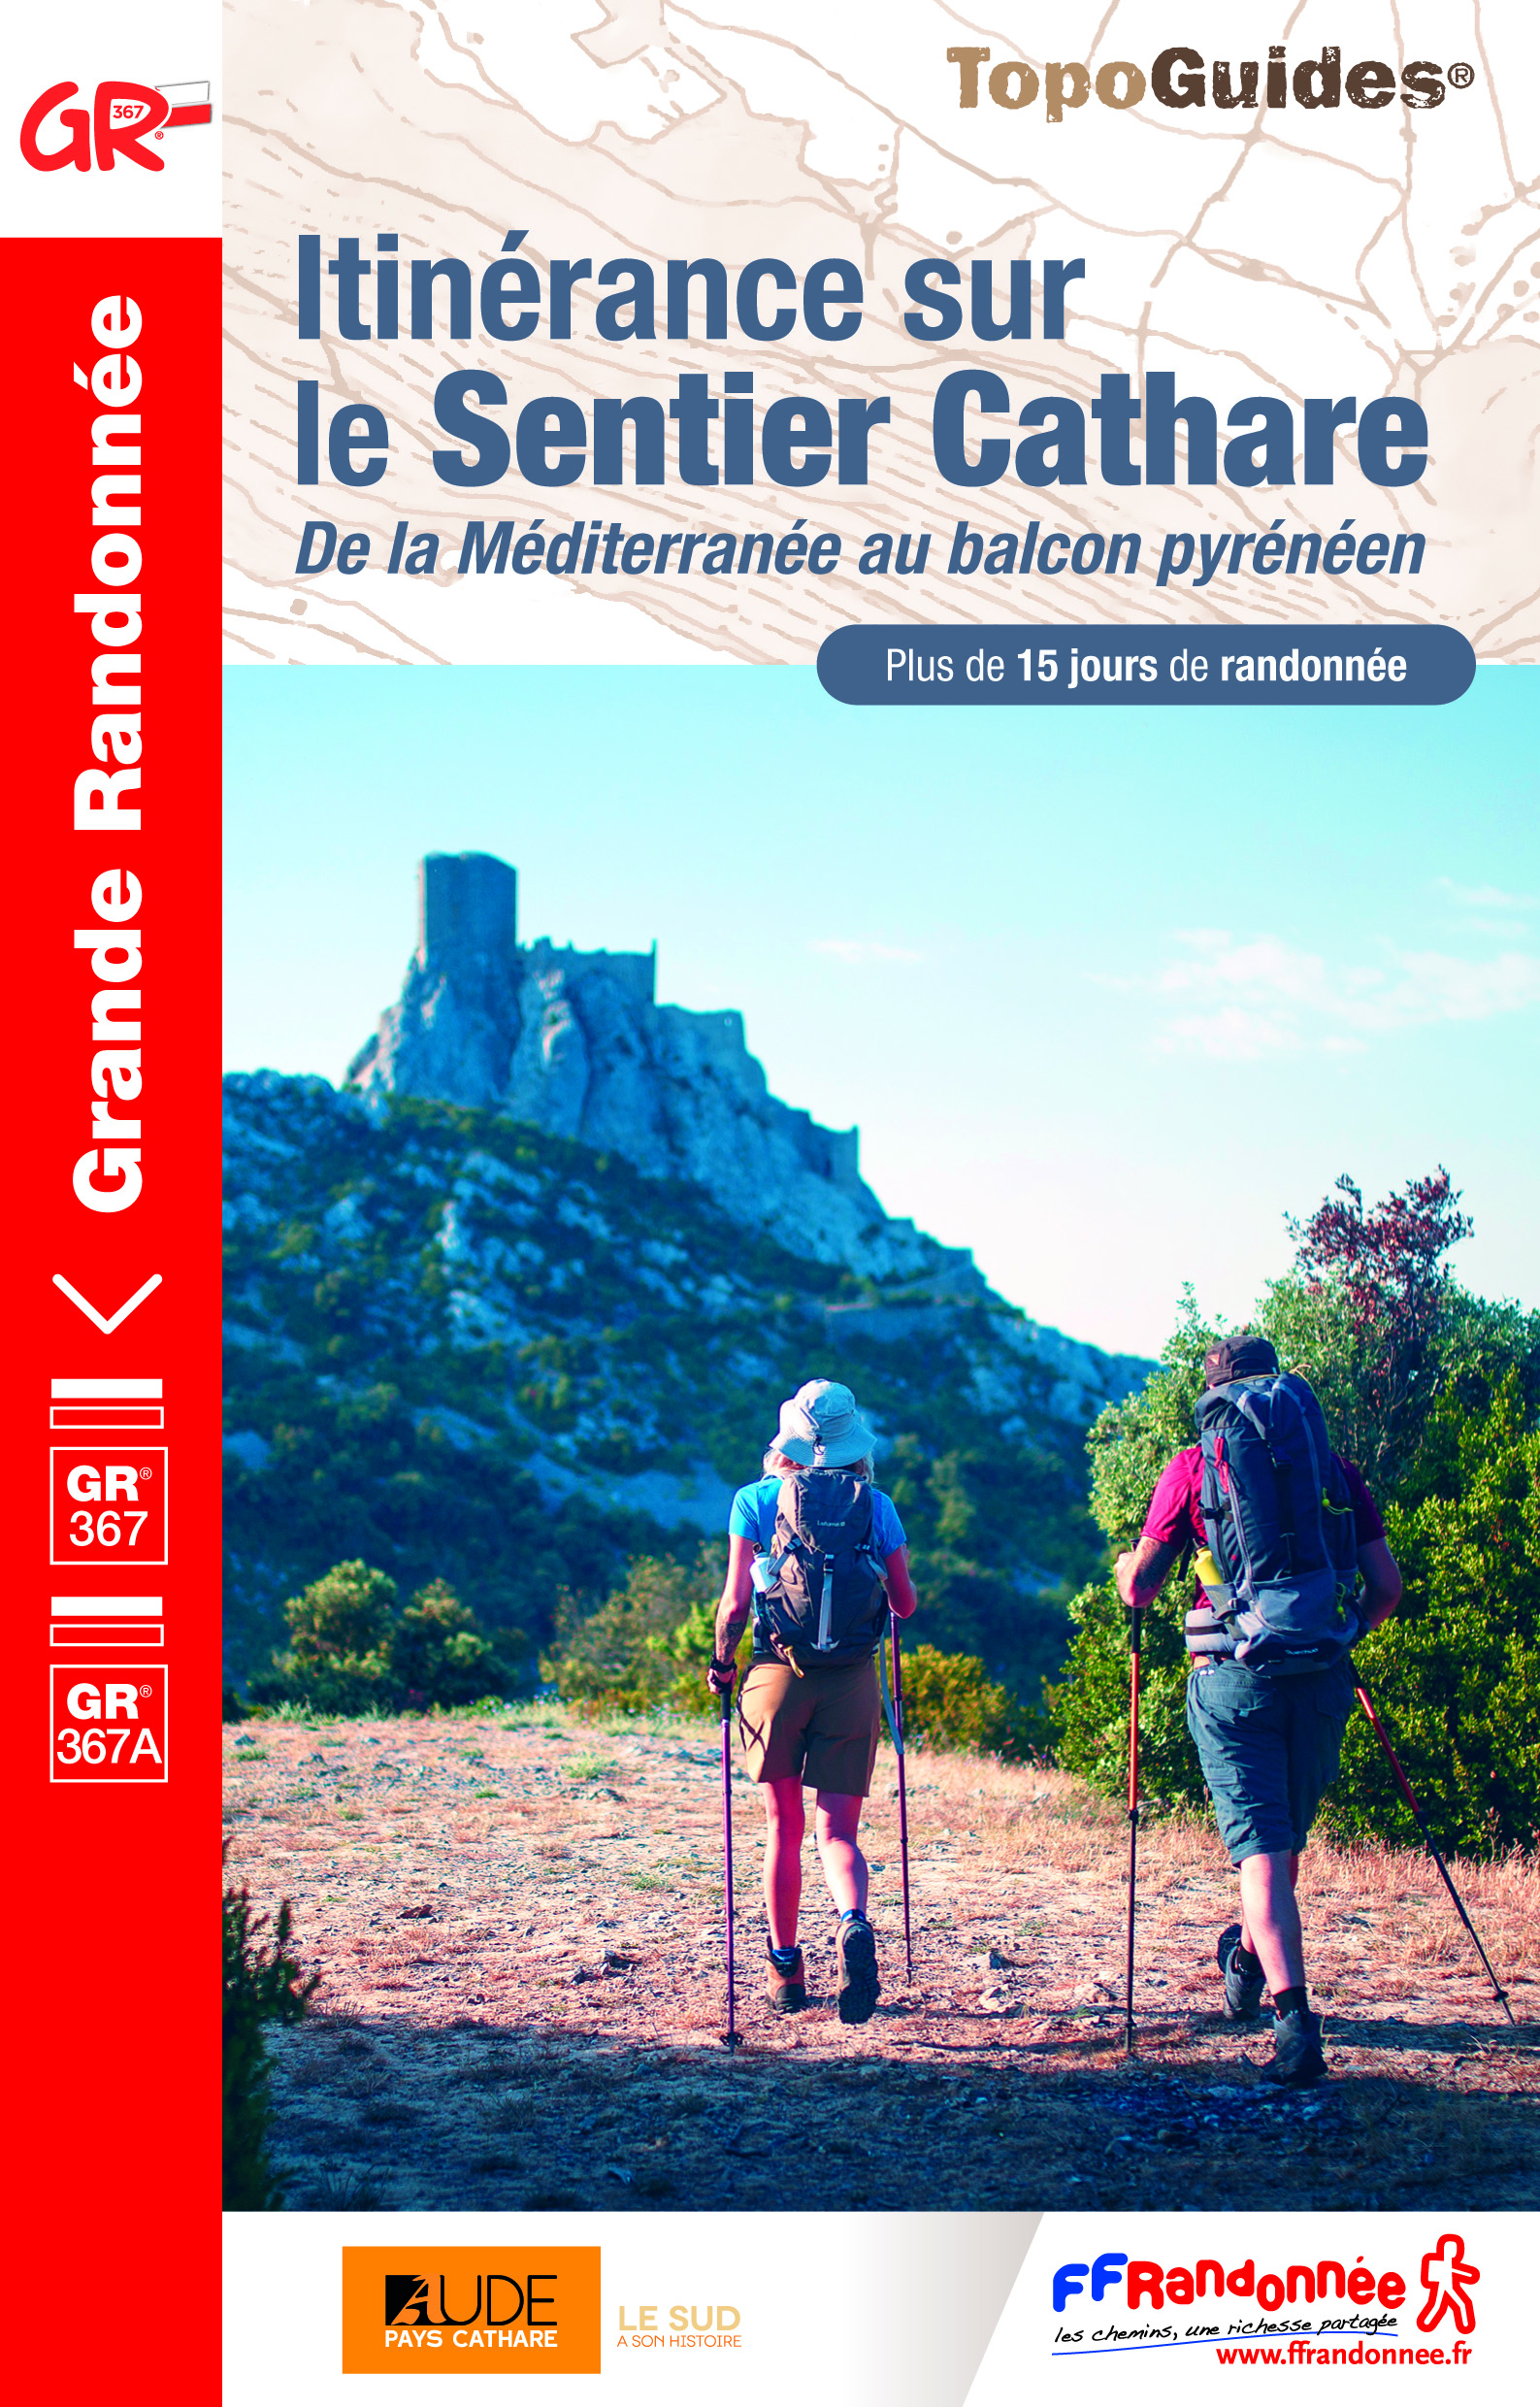 Topo Guide – Itinérance sur le Sentier Cathare (GR® 367)